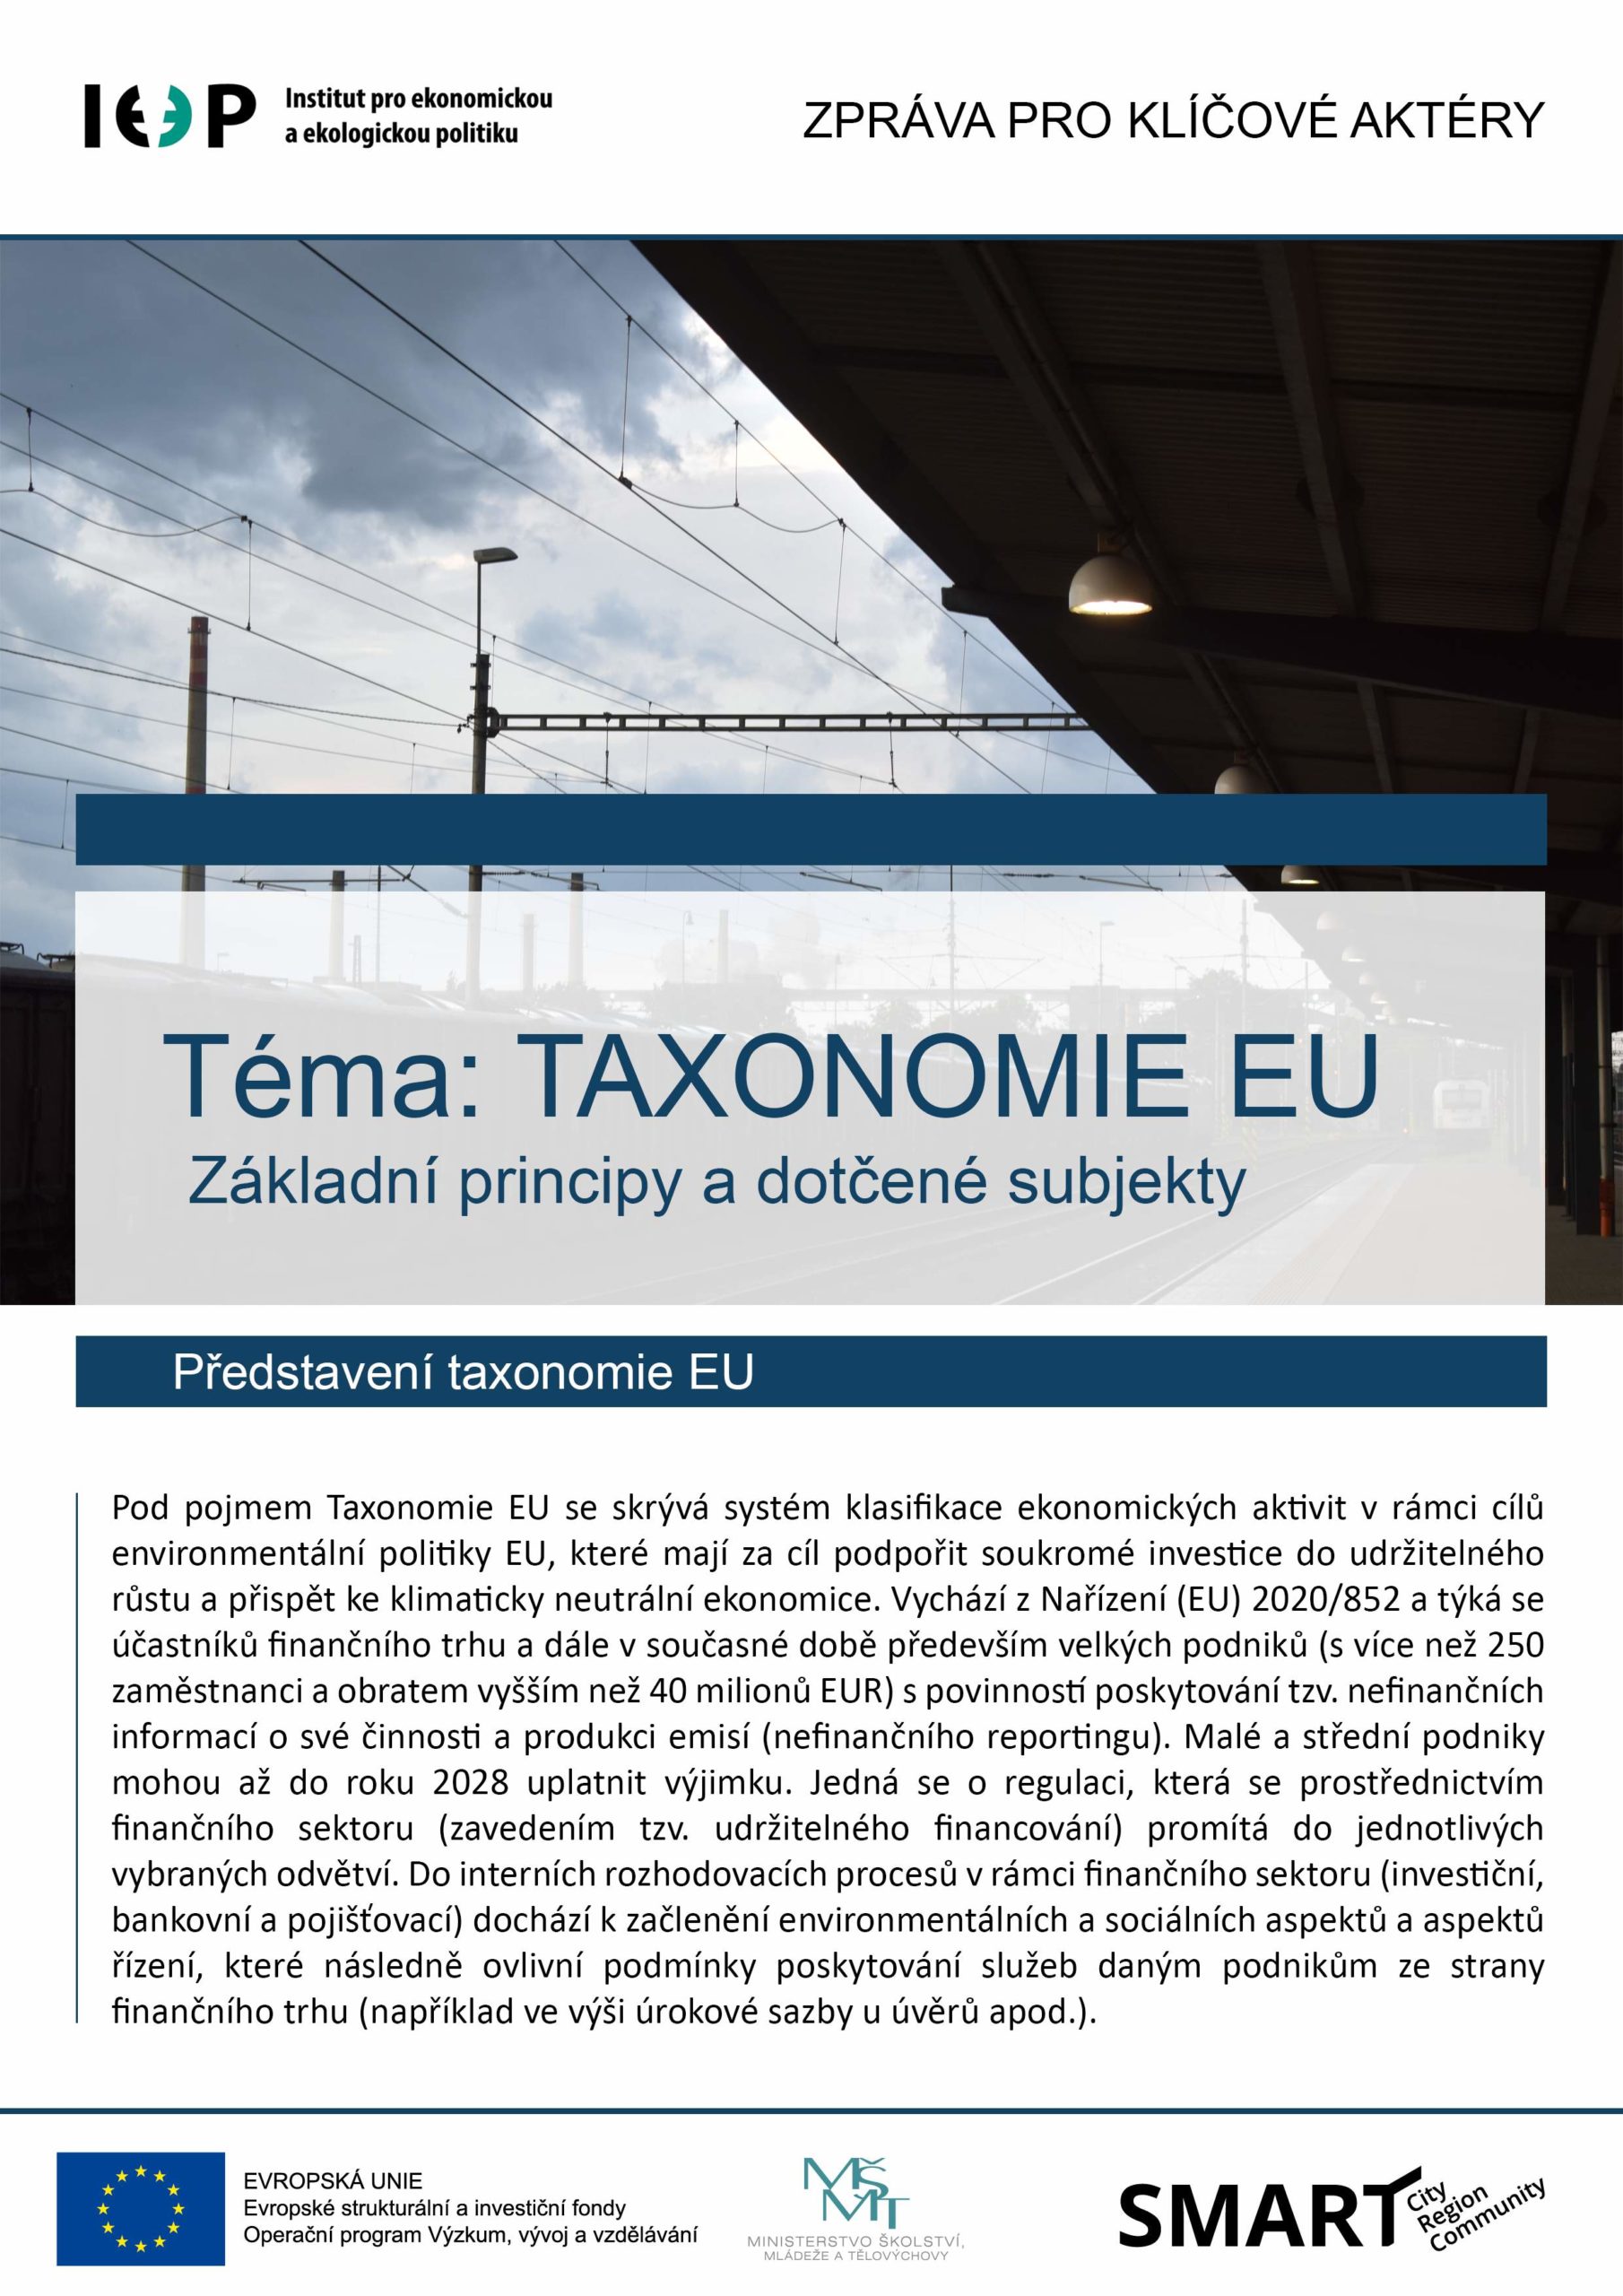 Taxonomie EU: základní principy a dotčené subjekty thumbnail